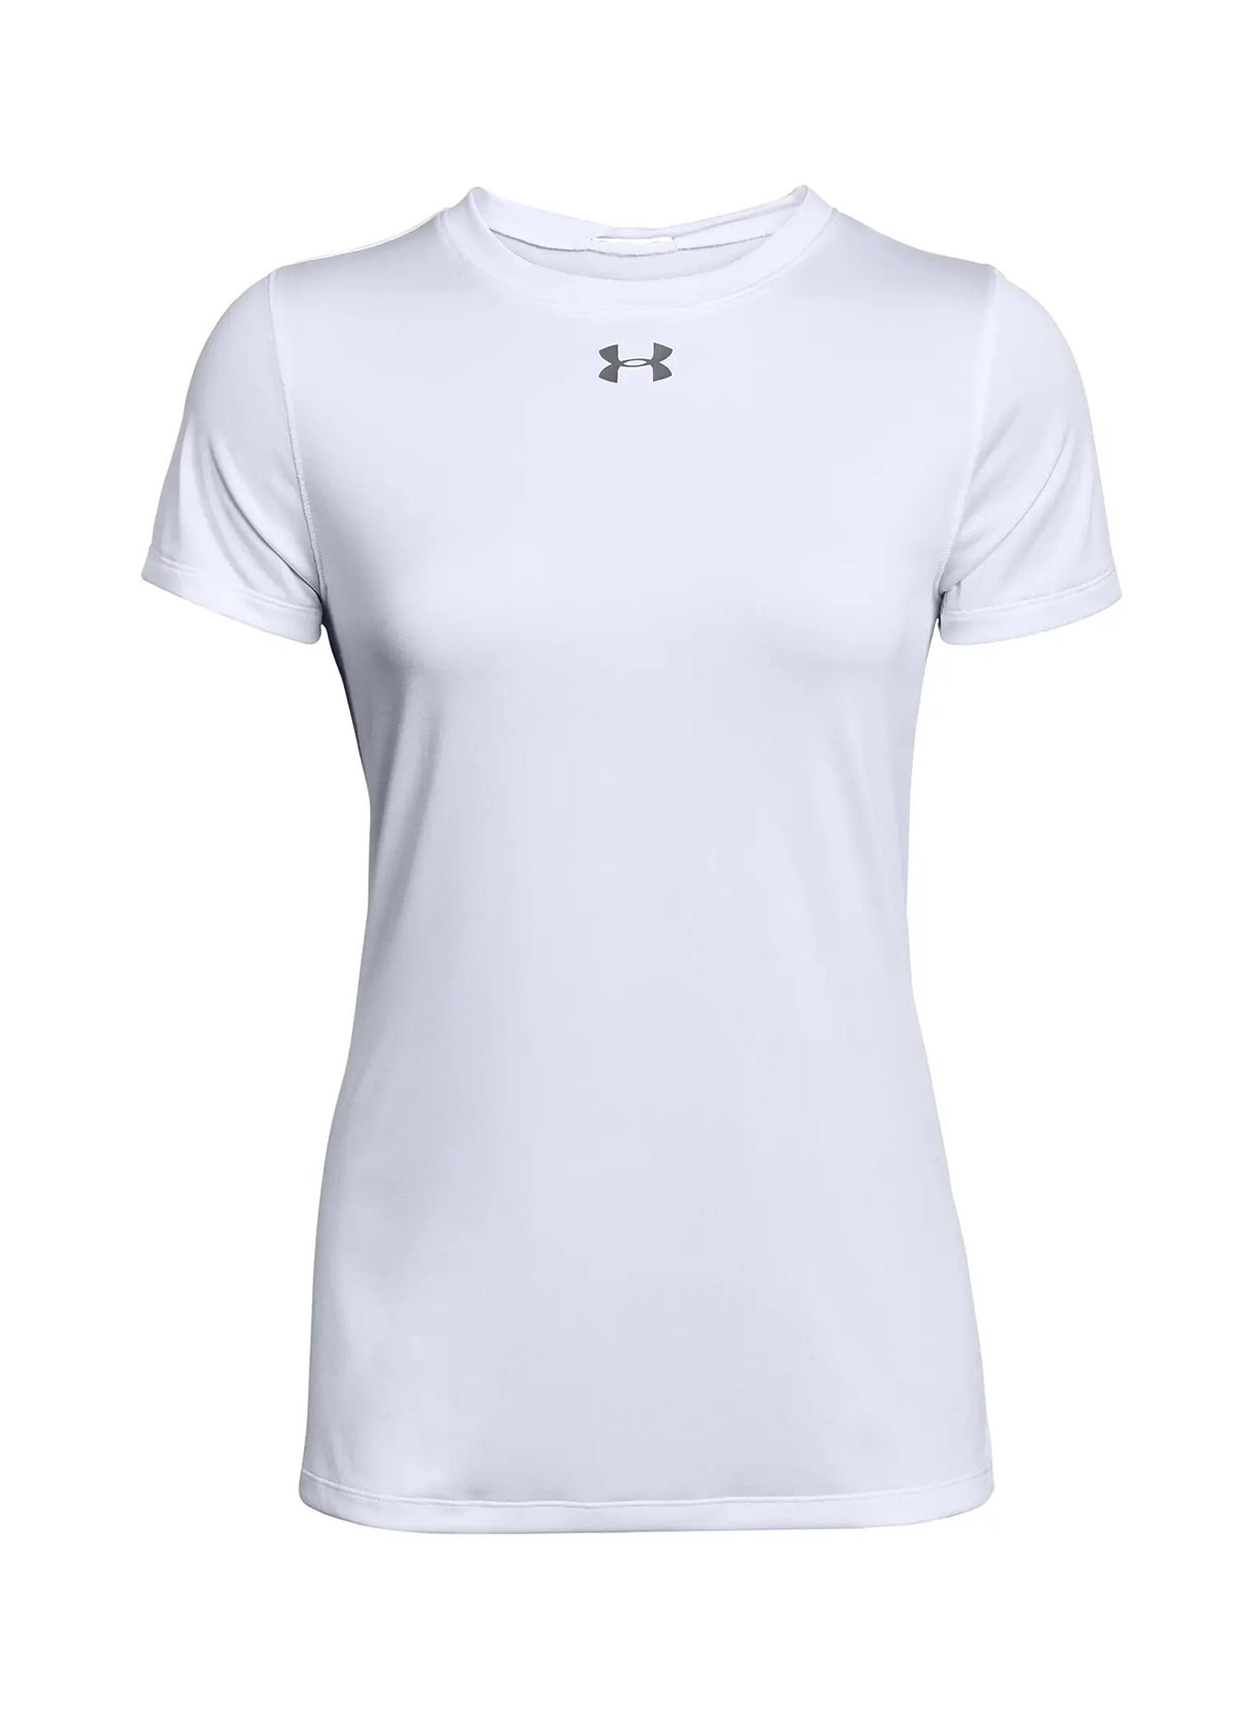 Under Armour Women's White / Graphite Locker 2.0 T-Shirt